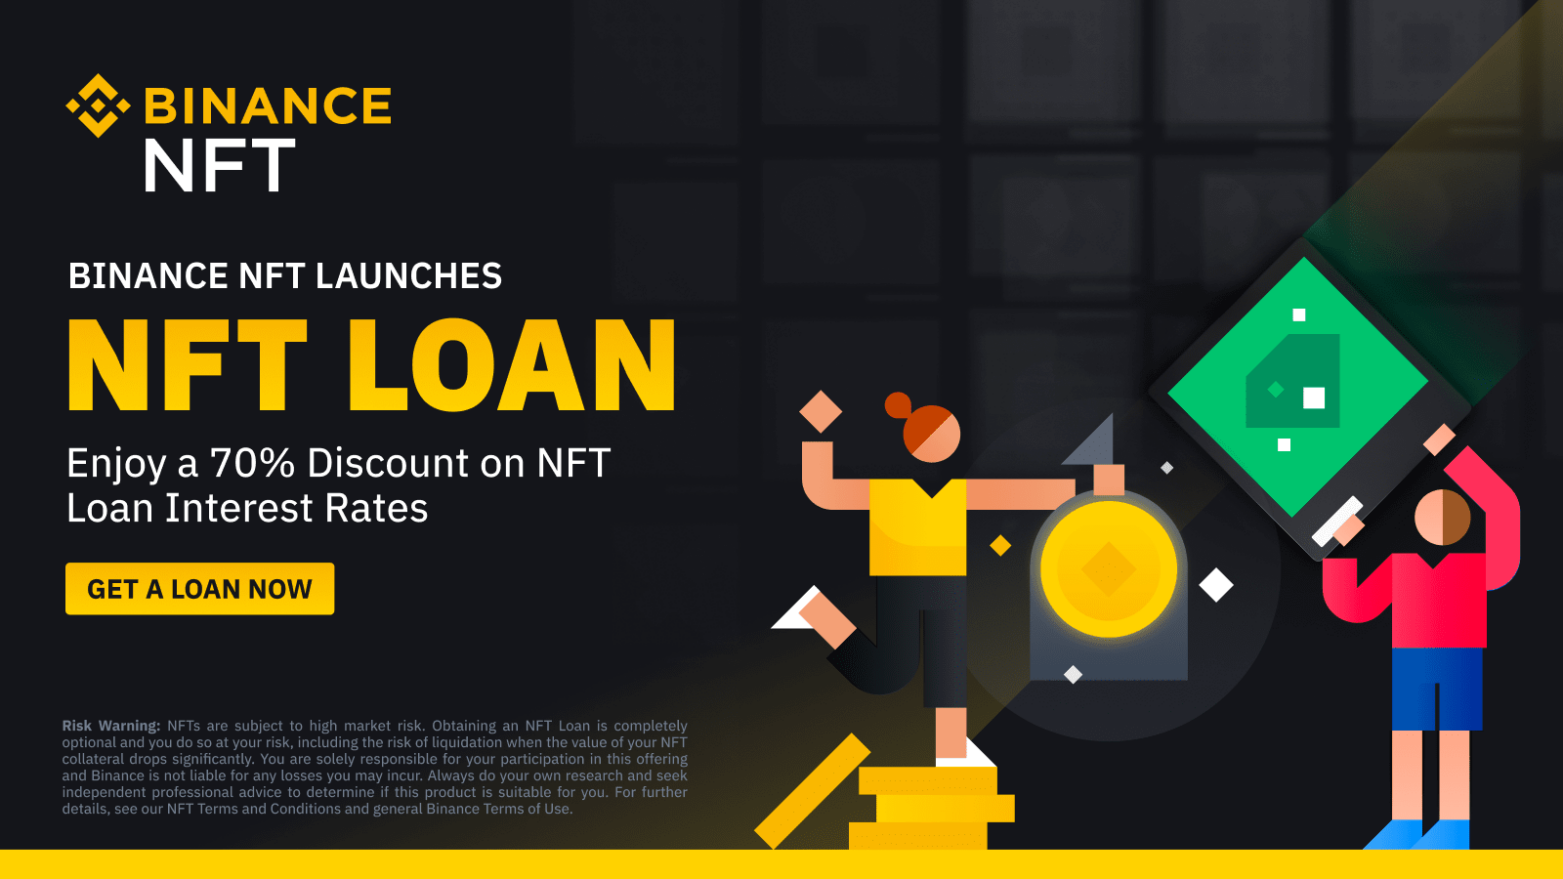 Binance launches NFT loan.